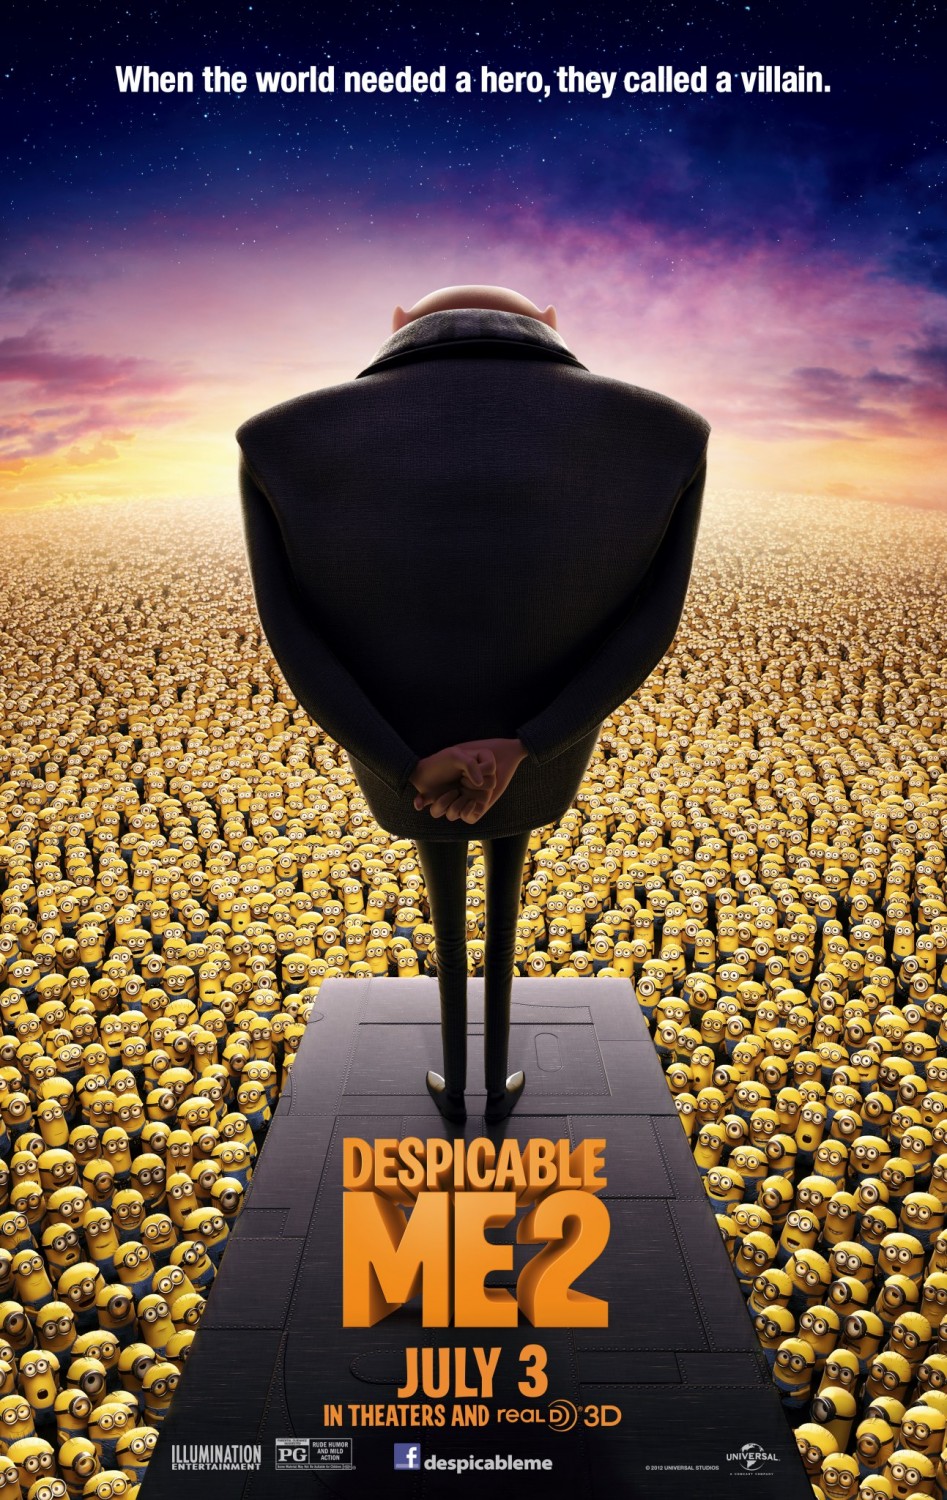 Xem Phim Kẻ Trộm Mặt Trăng 2 - Despicable Me 2 (2013) HD Vietsub mien phi - Poster Full HD